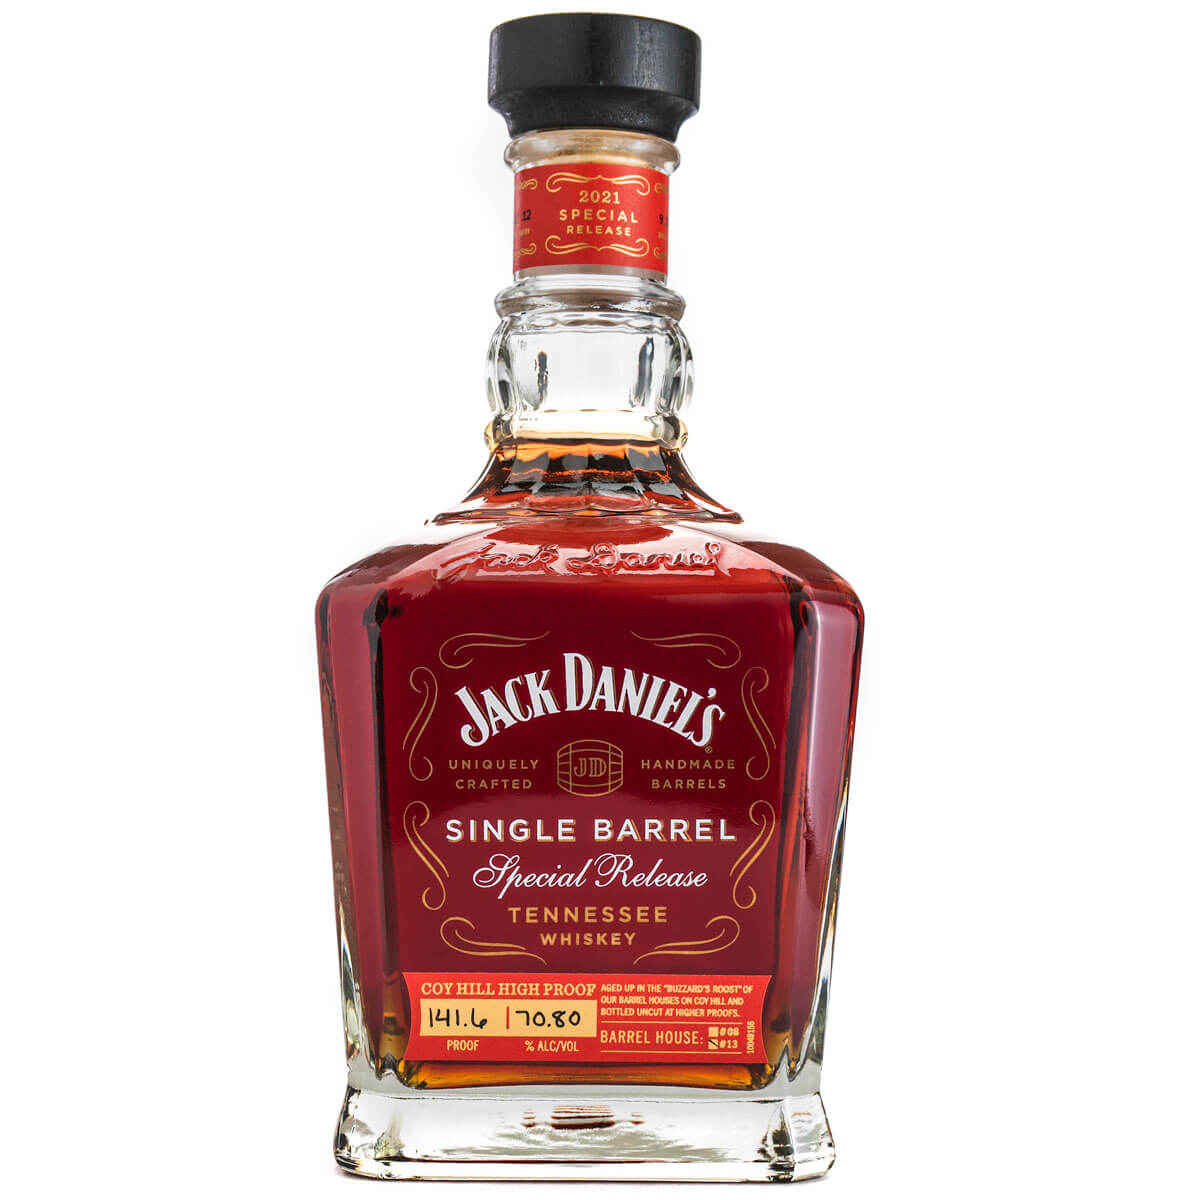 Jack Daniel's Single Barrel Special Release Coy Hill High Proof bottle